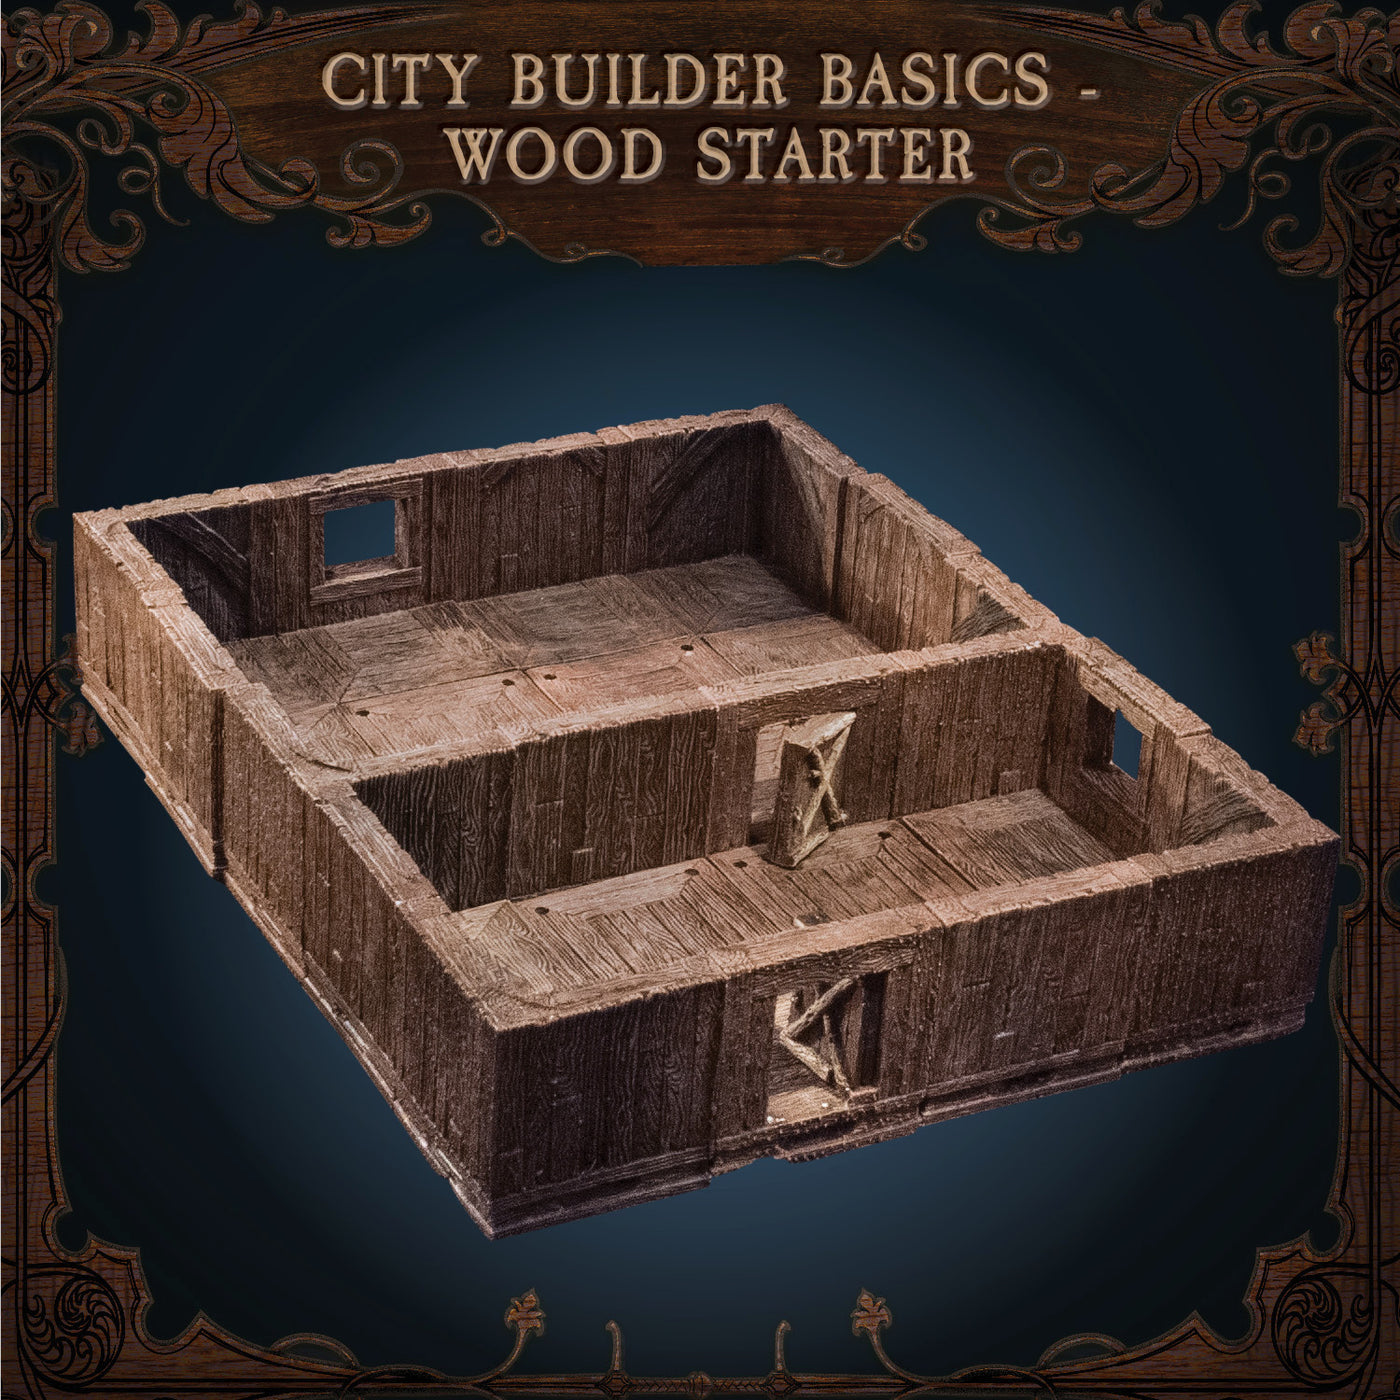 City Builder Basics - Wood Starter (Painted)